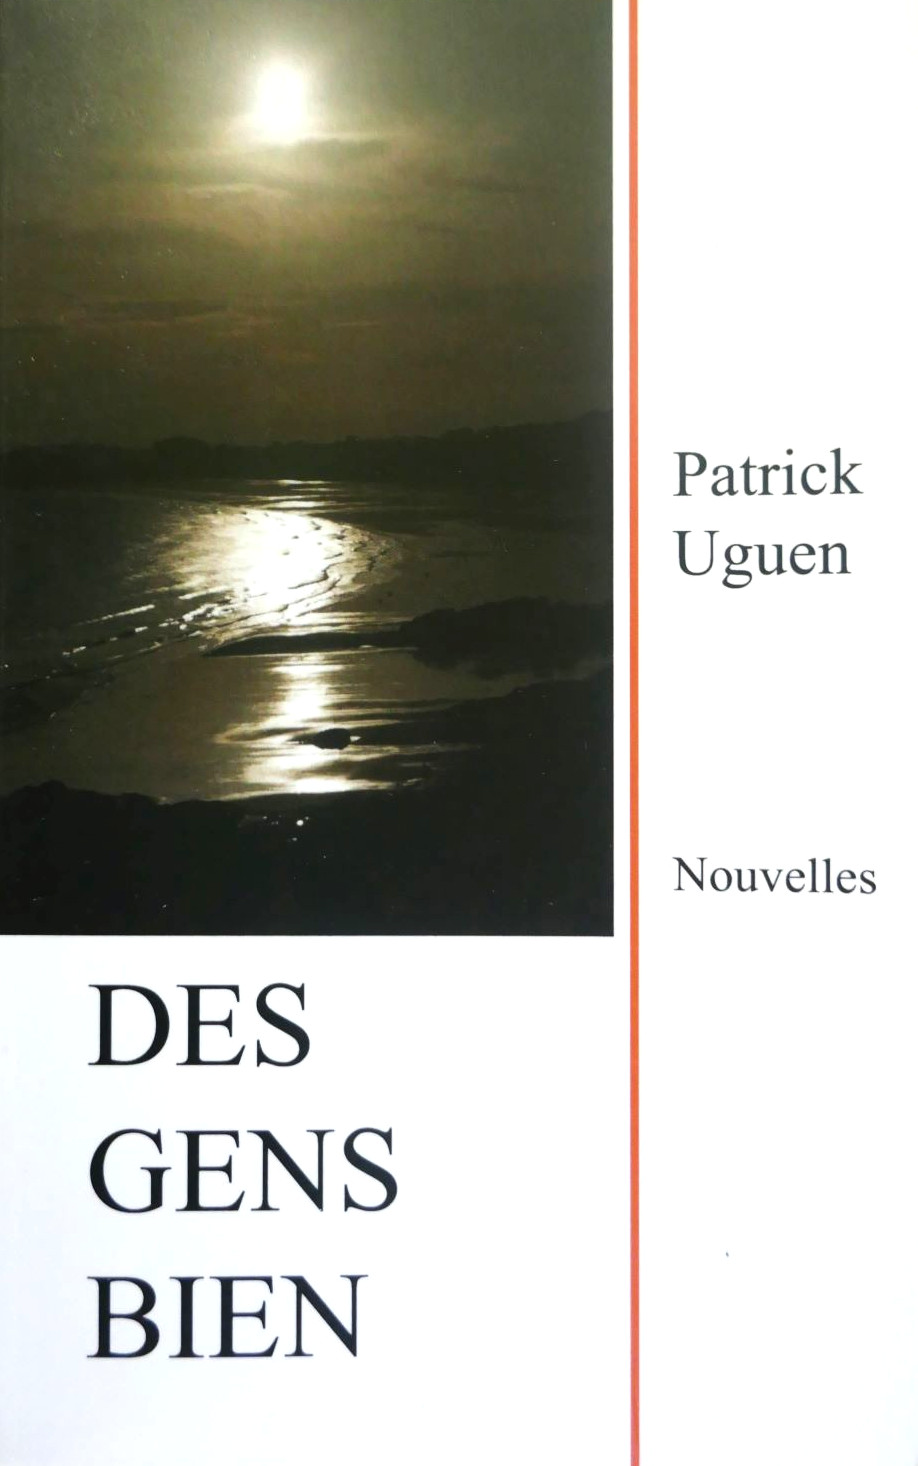 Livre 1 - Patrick Uguen